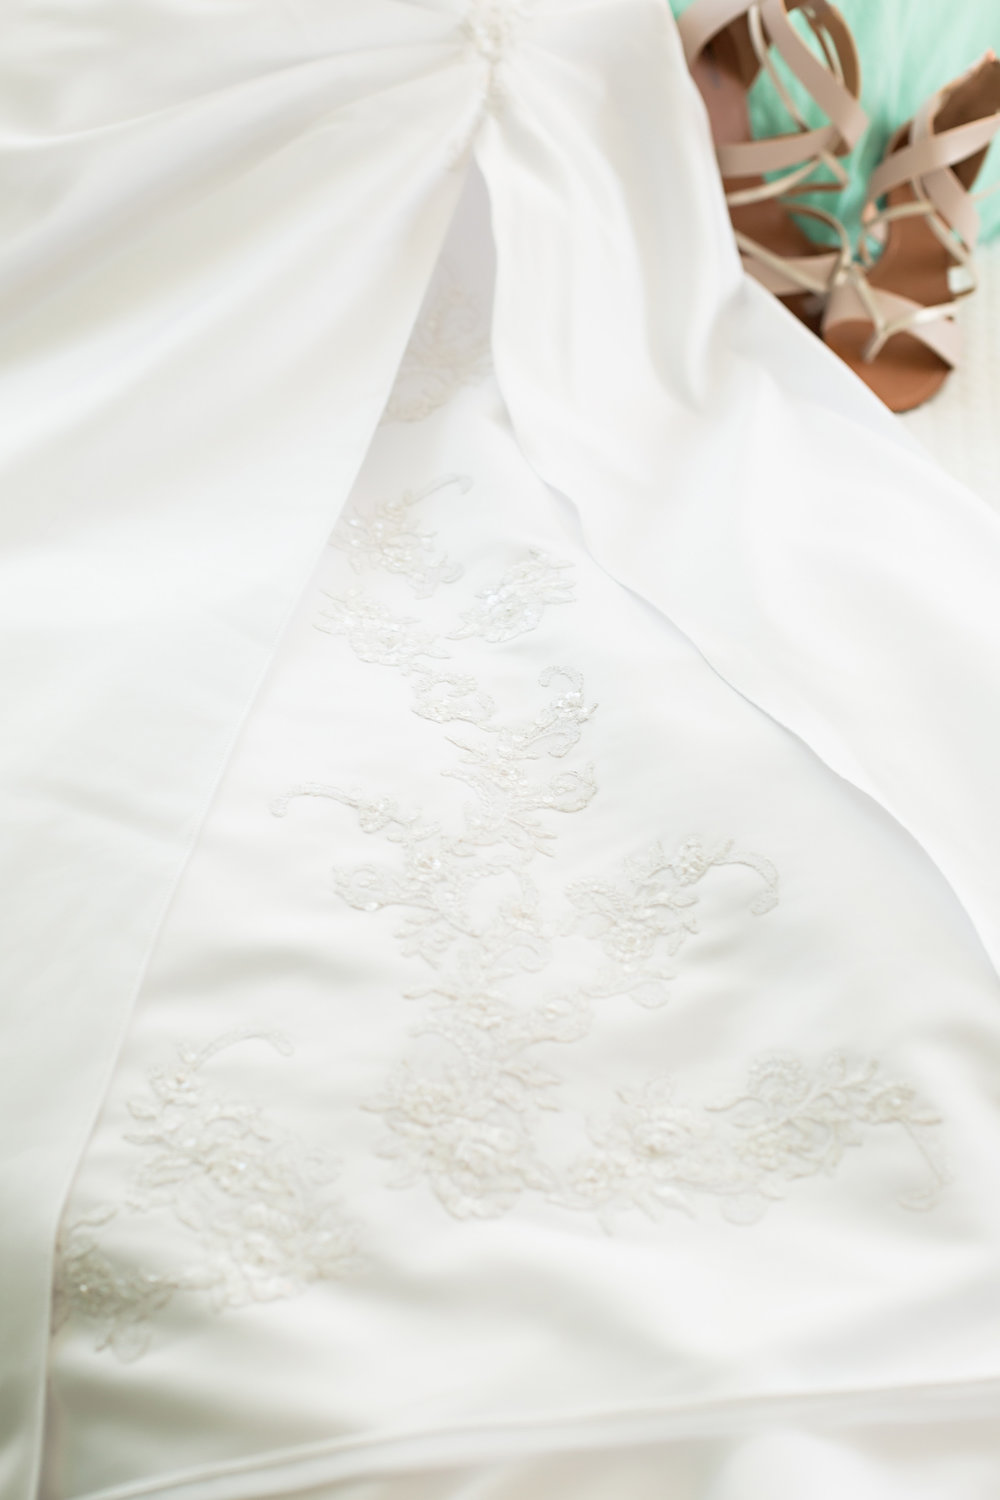 SSP summer wedding| bridal gown| details| backyard wedding